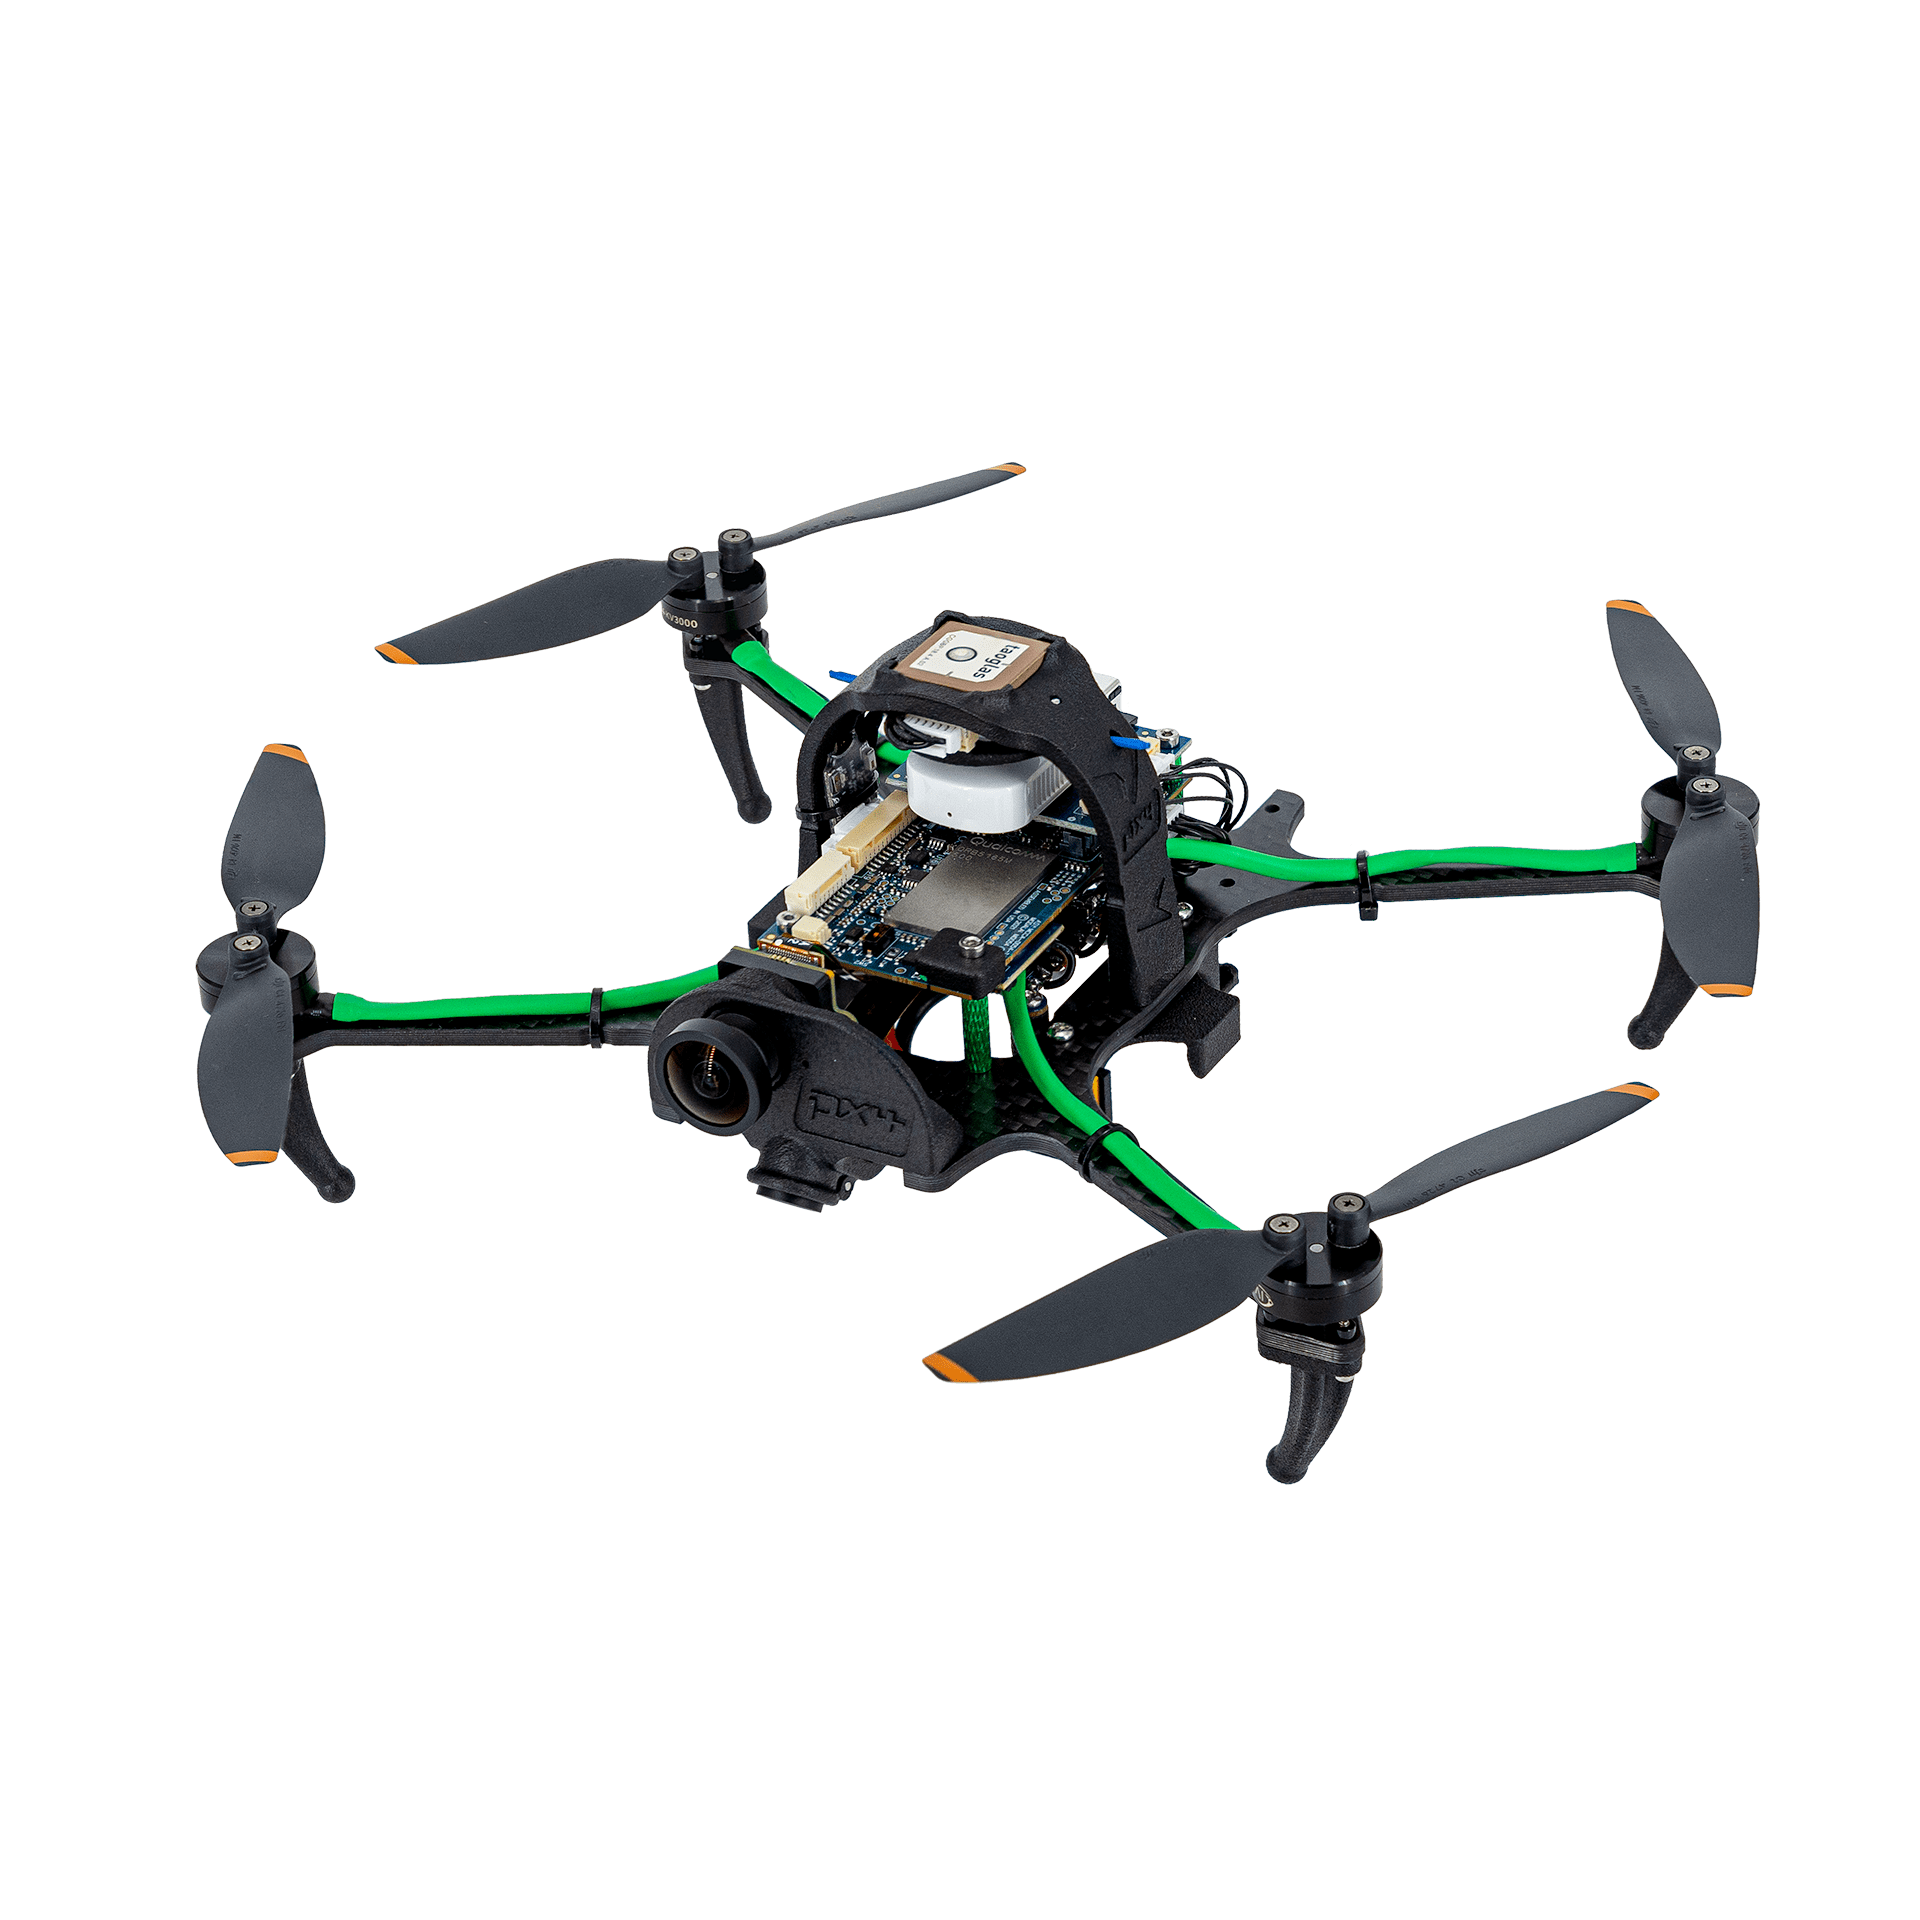 ModalAI, Inc. Drone Drone Only PX4 Autonomy Developer Kit